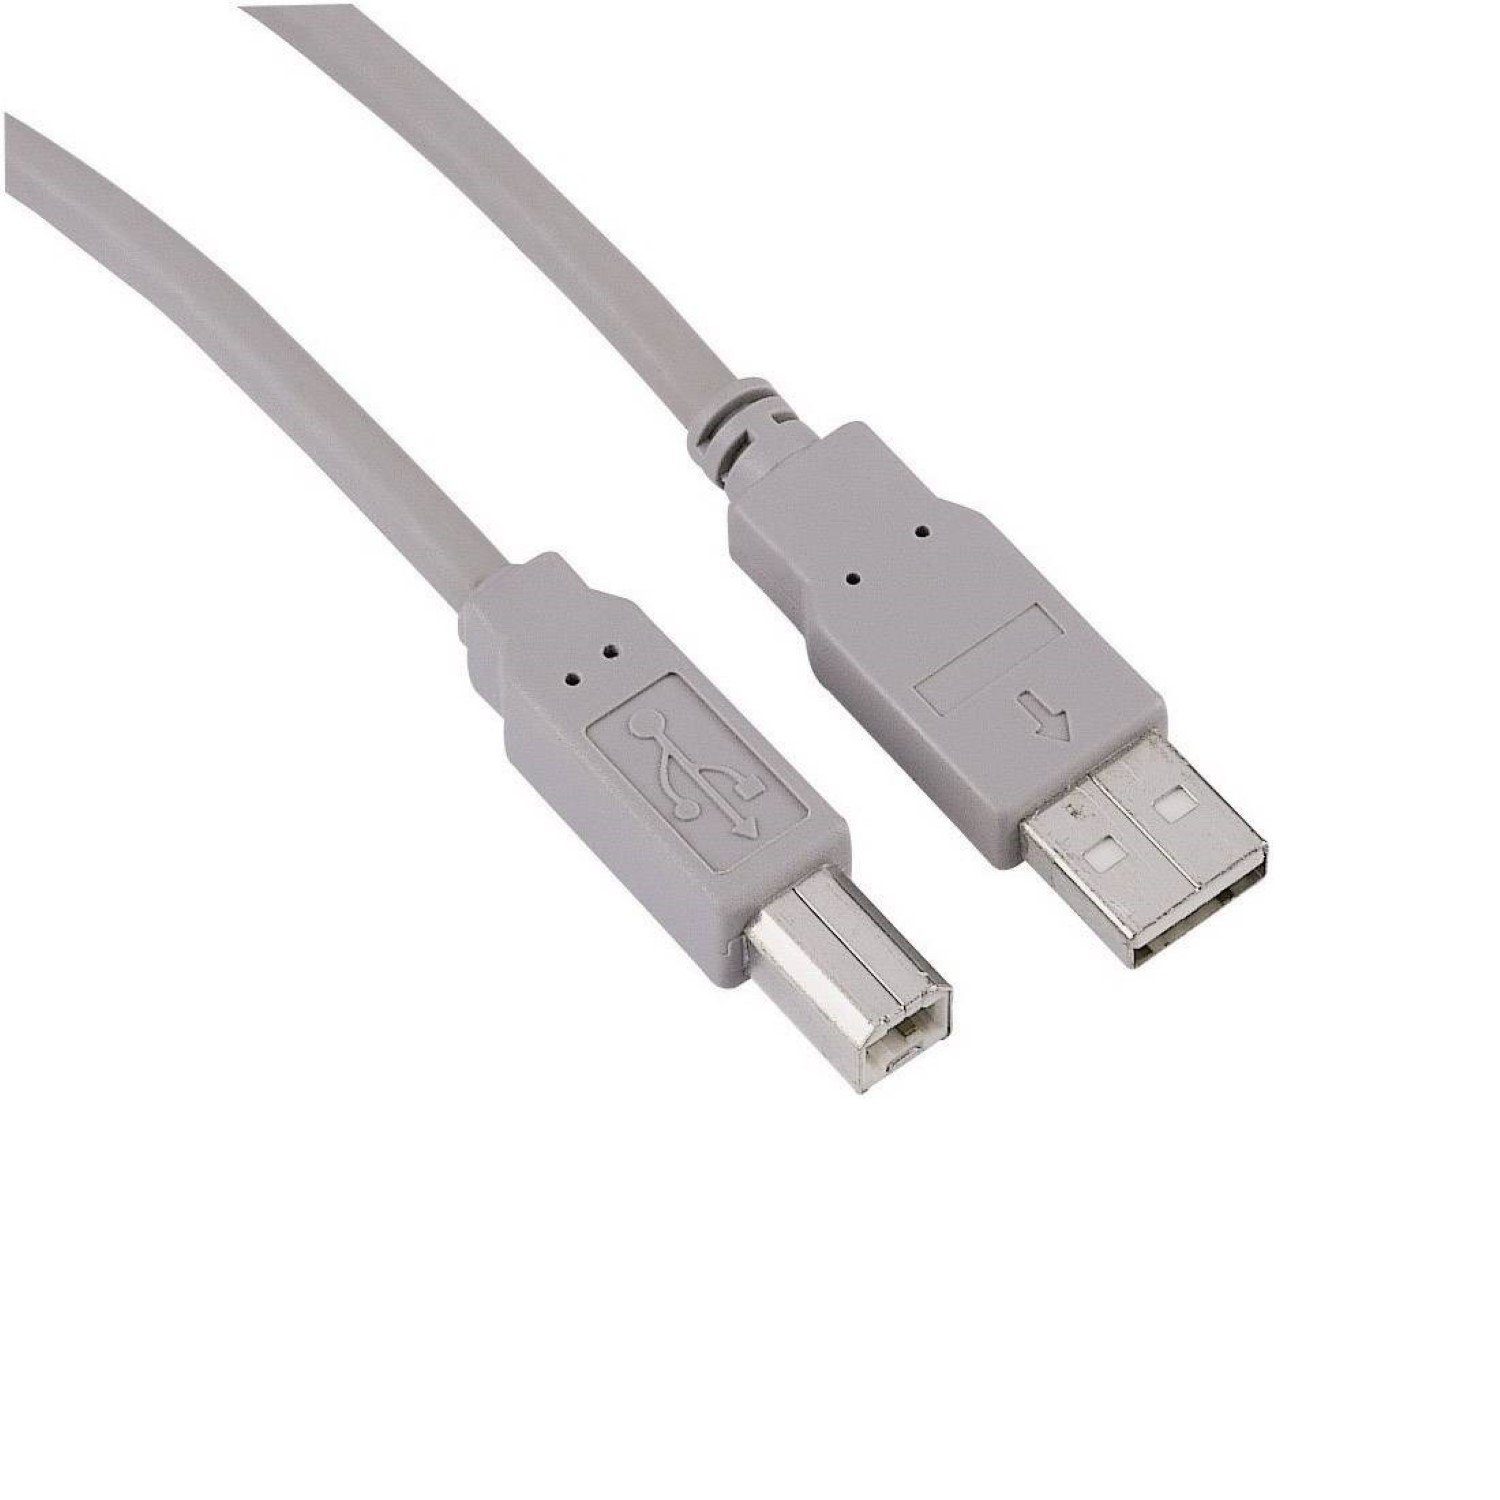 Hama »USB-Kabel Anschlusskabel USB 2.0 1,8m« USB-Kabel, USB Typ A,USB Typ  A, Keine, USB 2.0, passend für PC, Notebook, Maus, Mouse, Tastatur,  Drucker, Scanner, Webcam, externe Festplatte HDD, etc. online kaufen